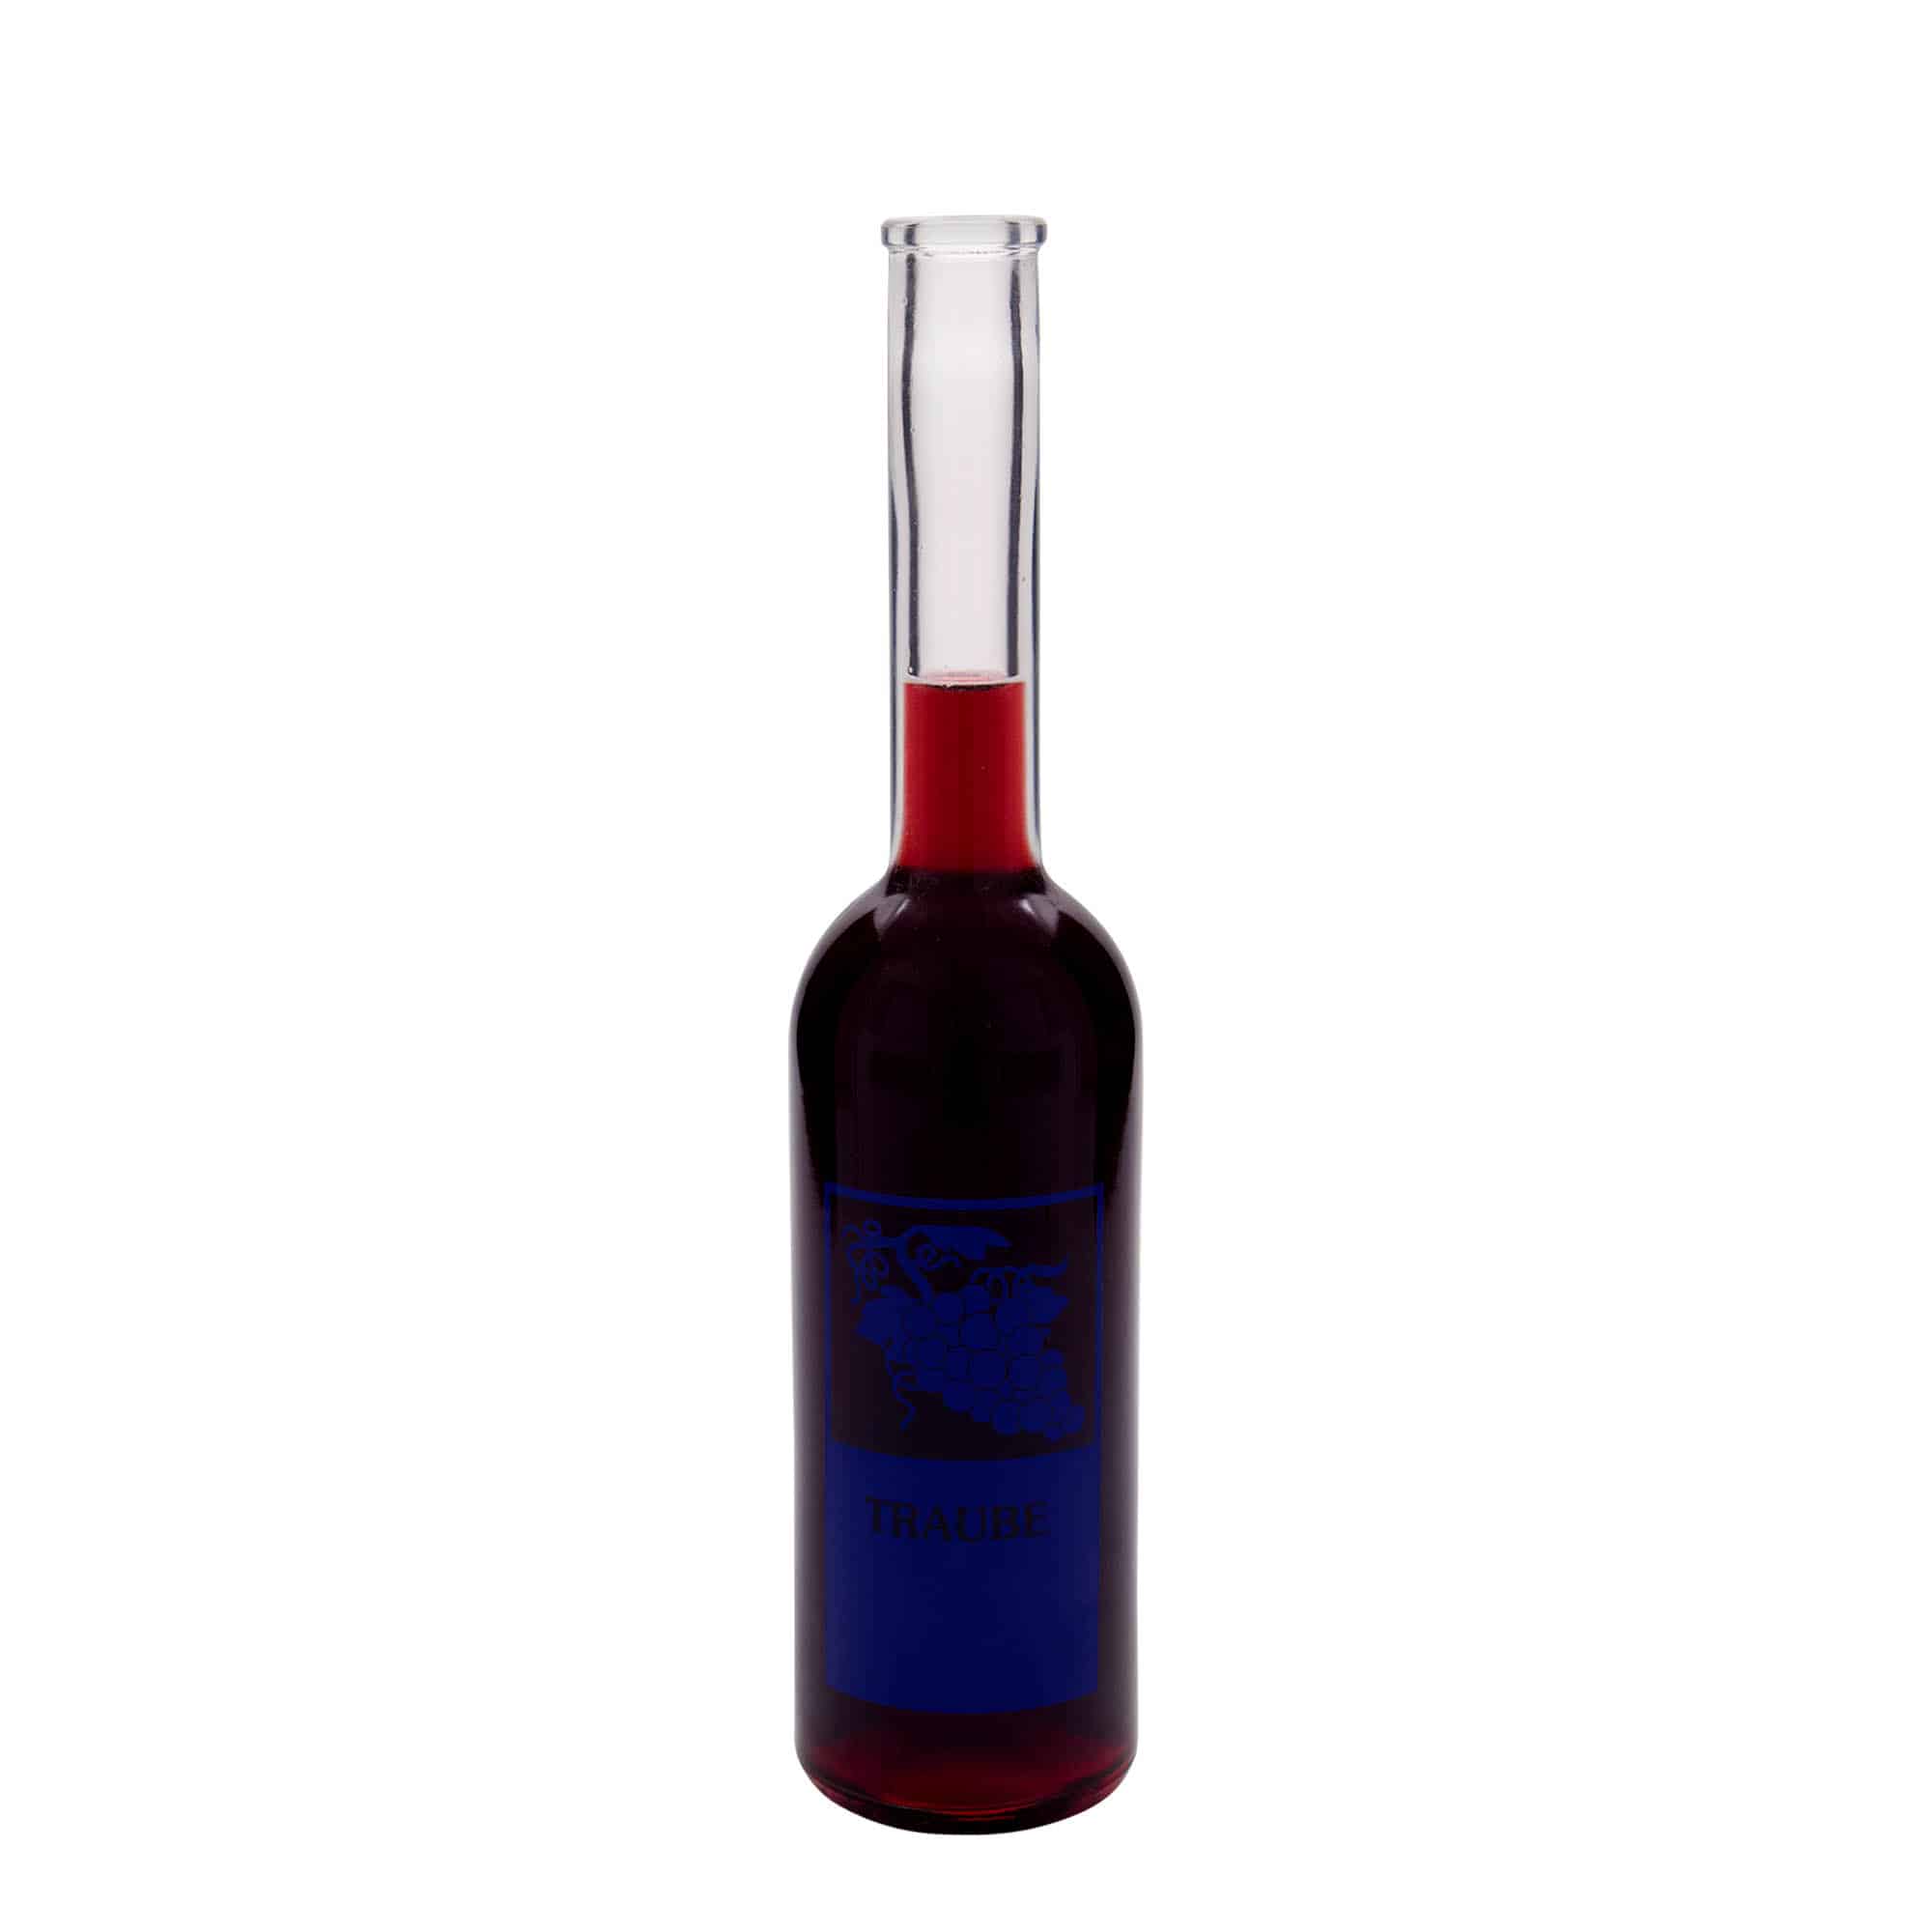 500 ml glass bottle 'Opera', print: grape, closure: cork